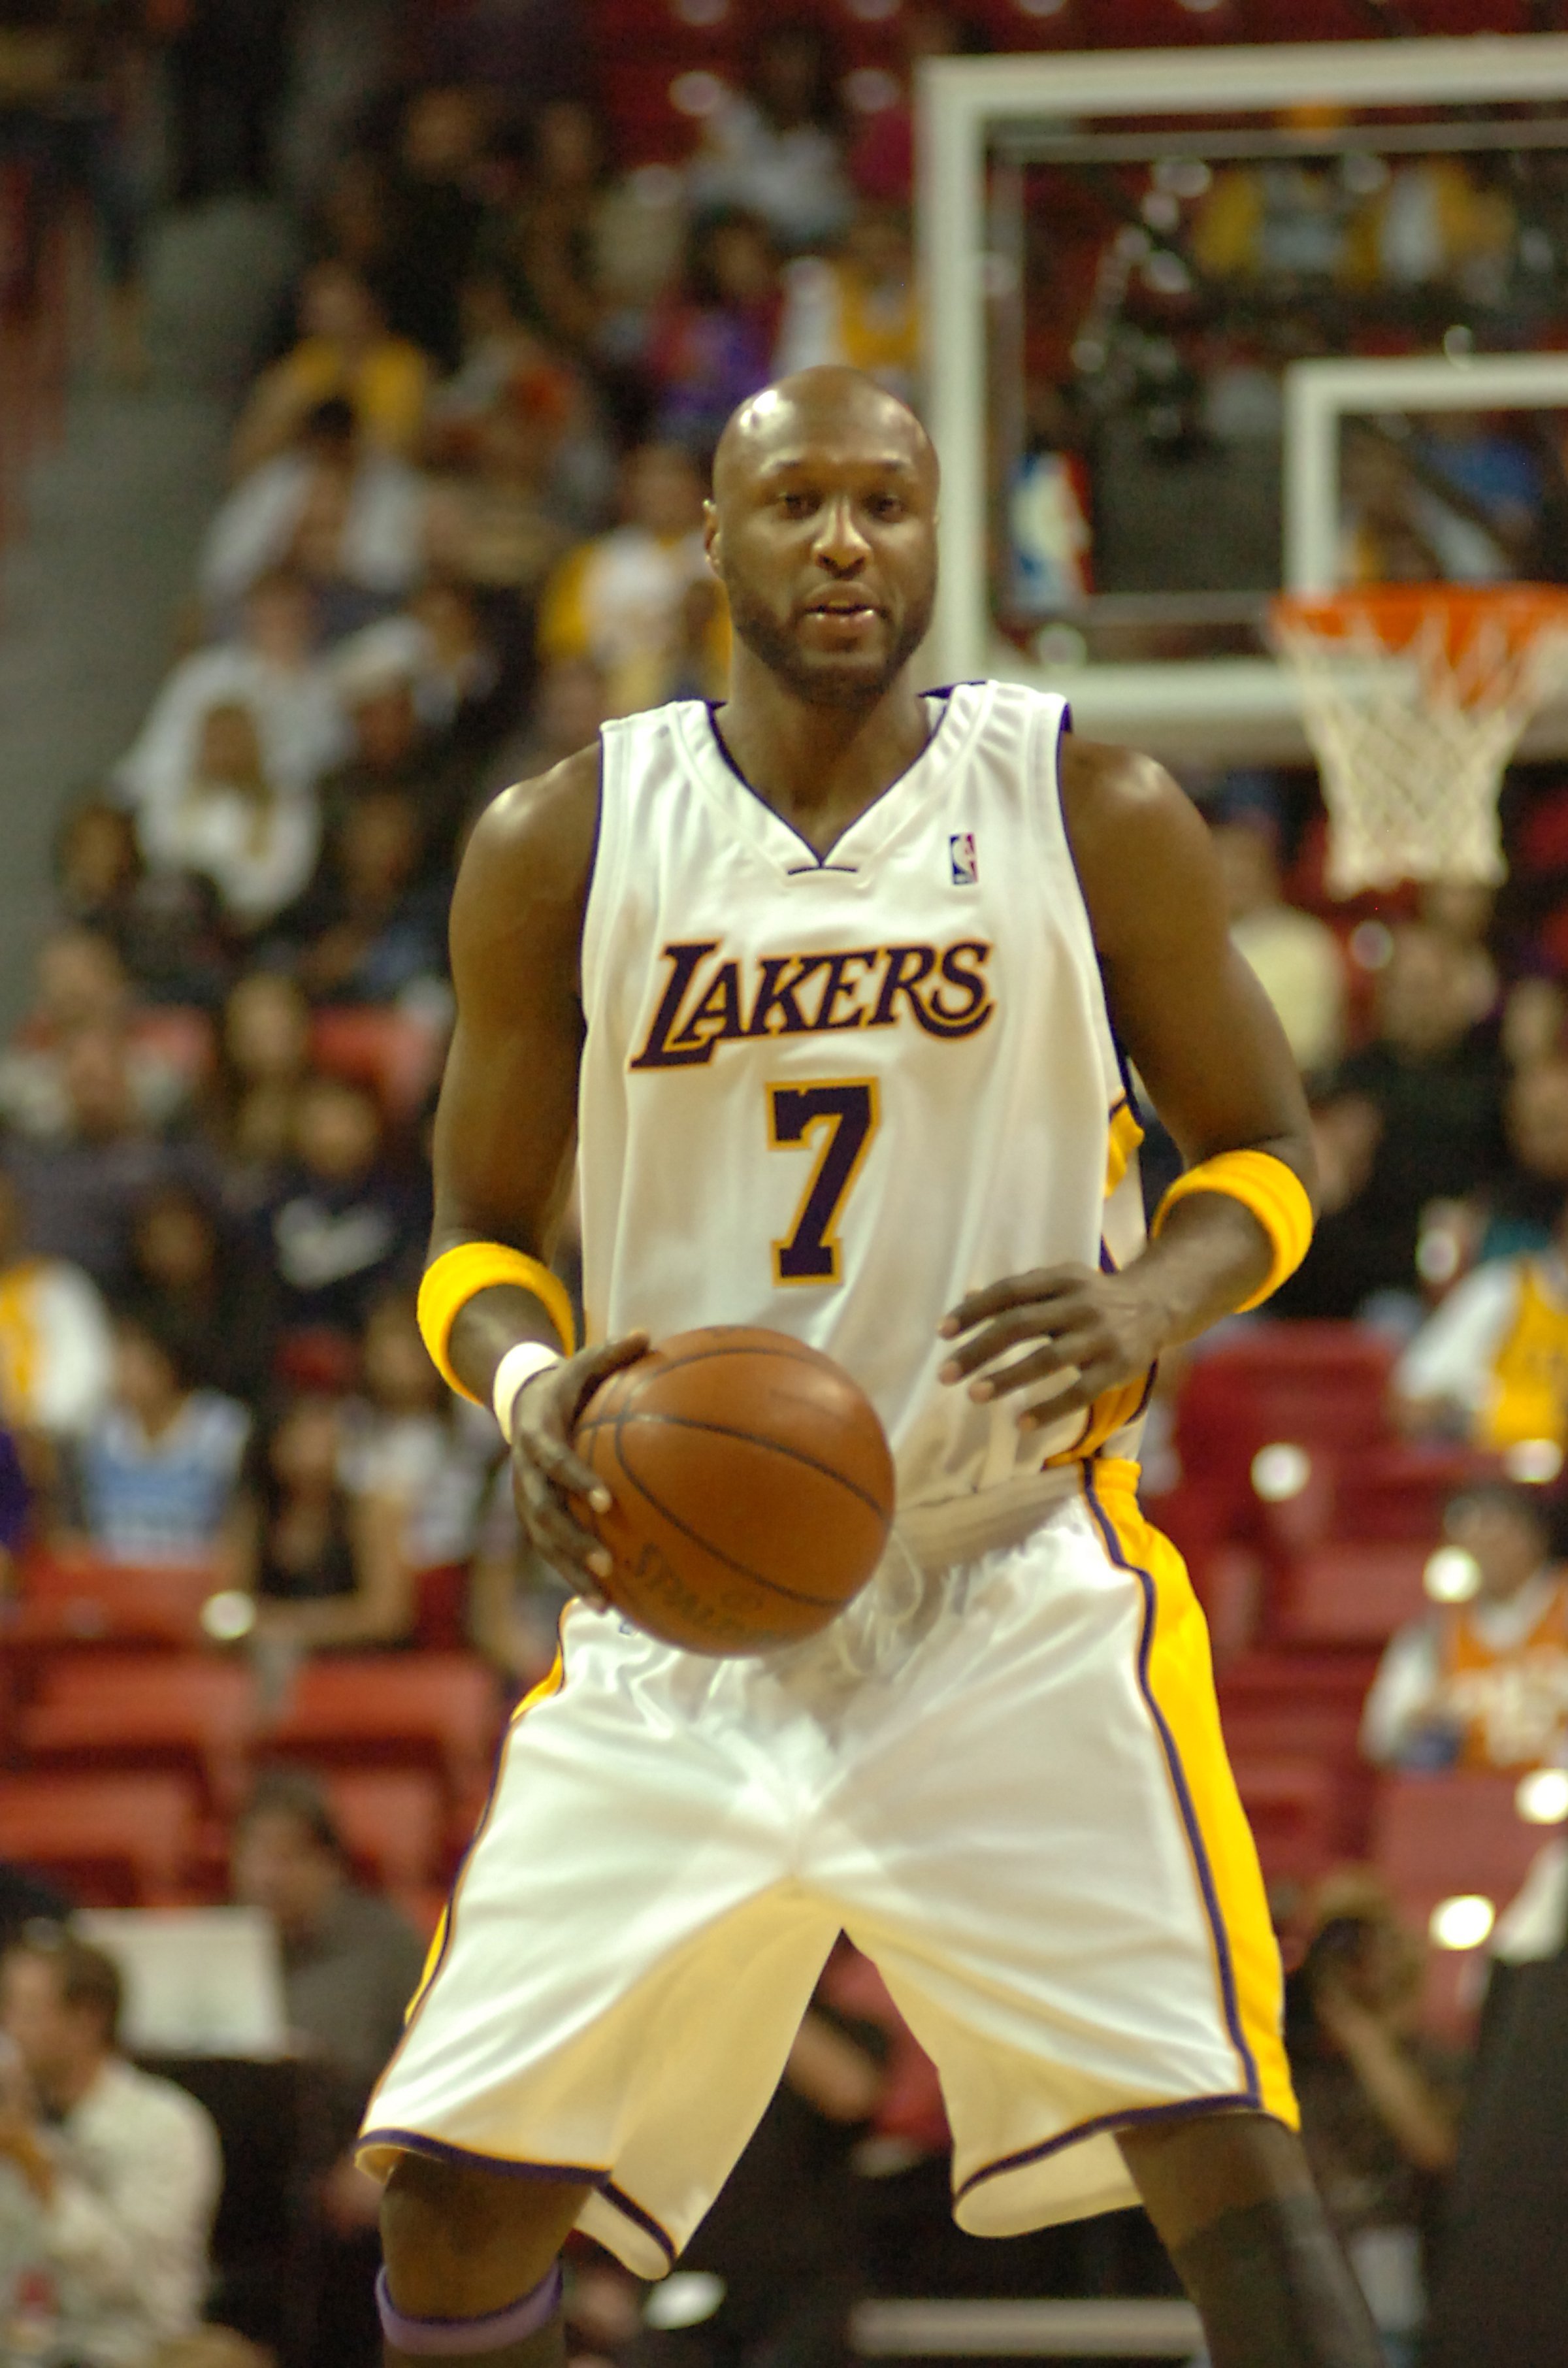 Lakers # 7 Lamar Odom, L.A. Lakers vs. Sacramento Kings at the Thomas and Mack Center in Las Vegas, Nevada.